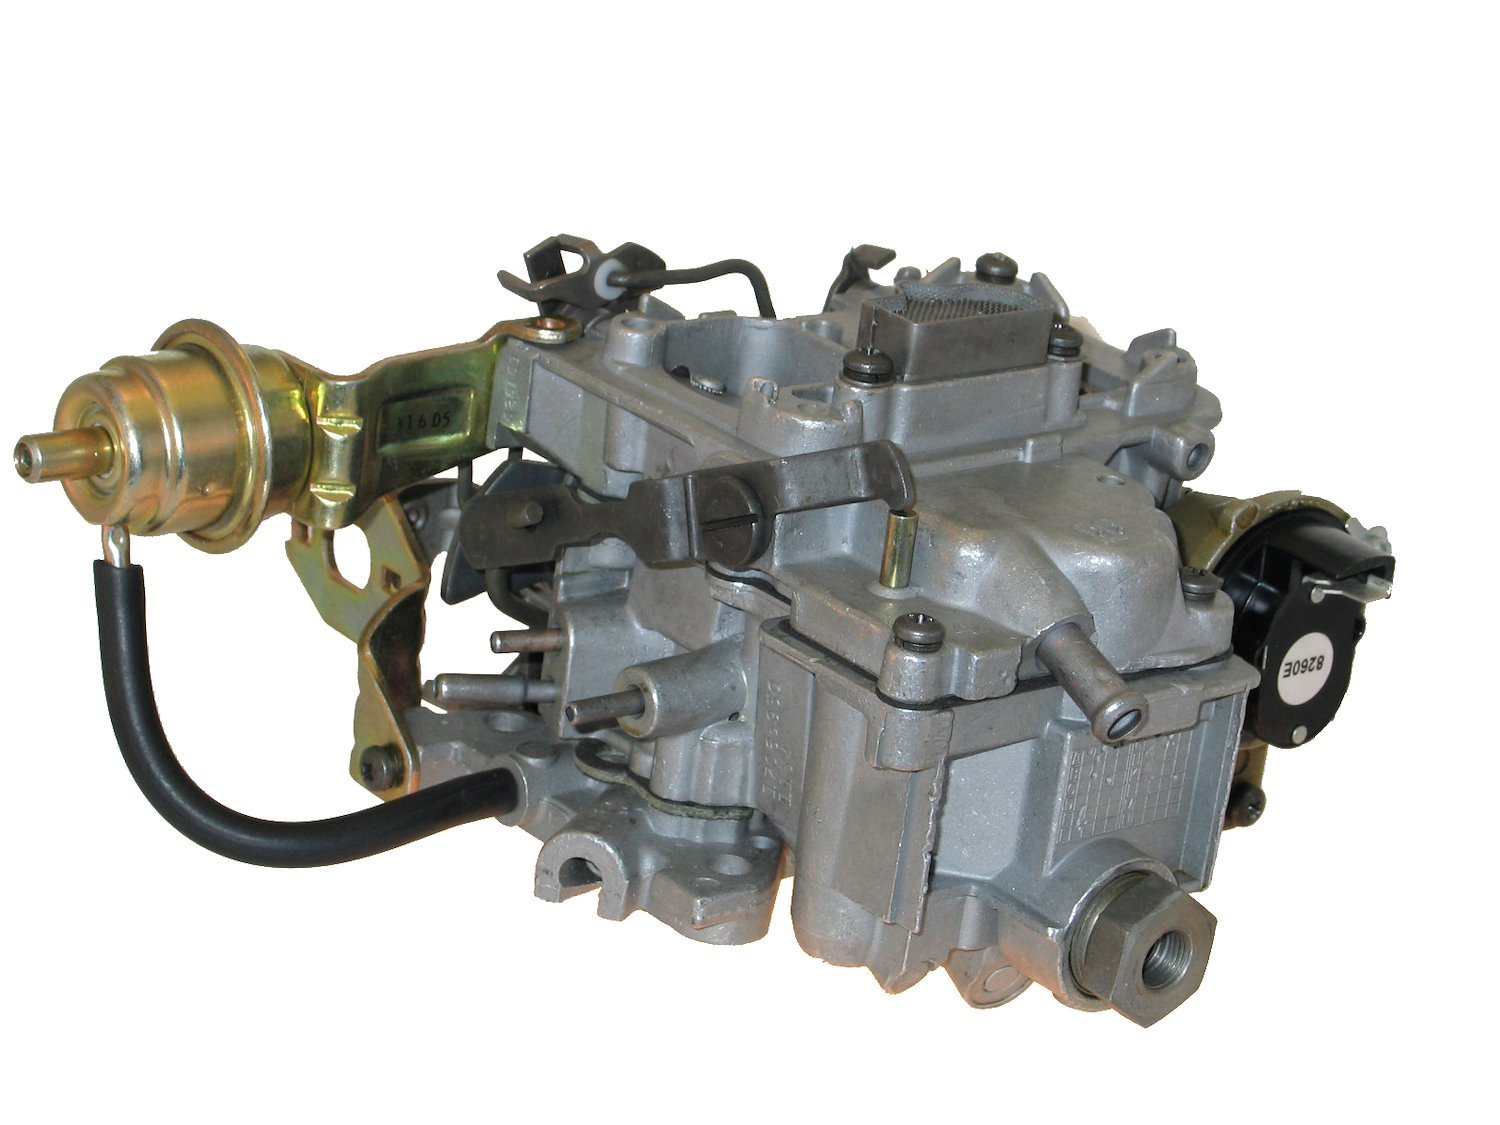 14-4213 Rochester Remanufactured Carburetor, 2SE, Open Loop-Style